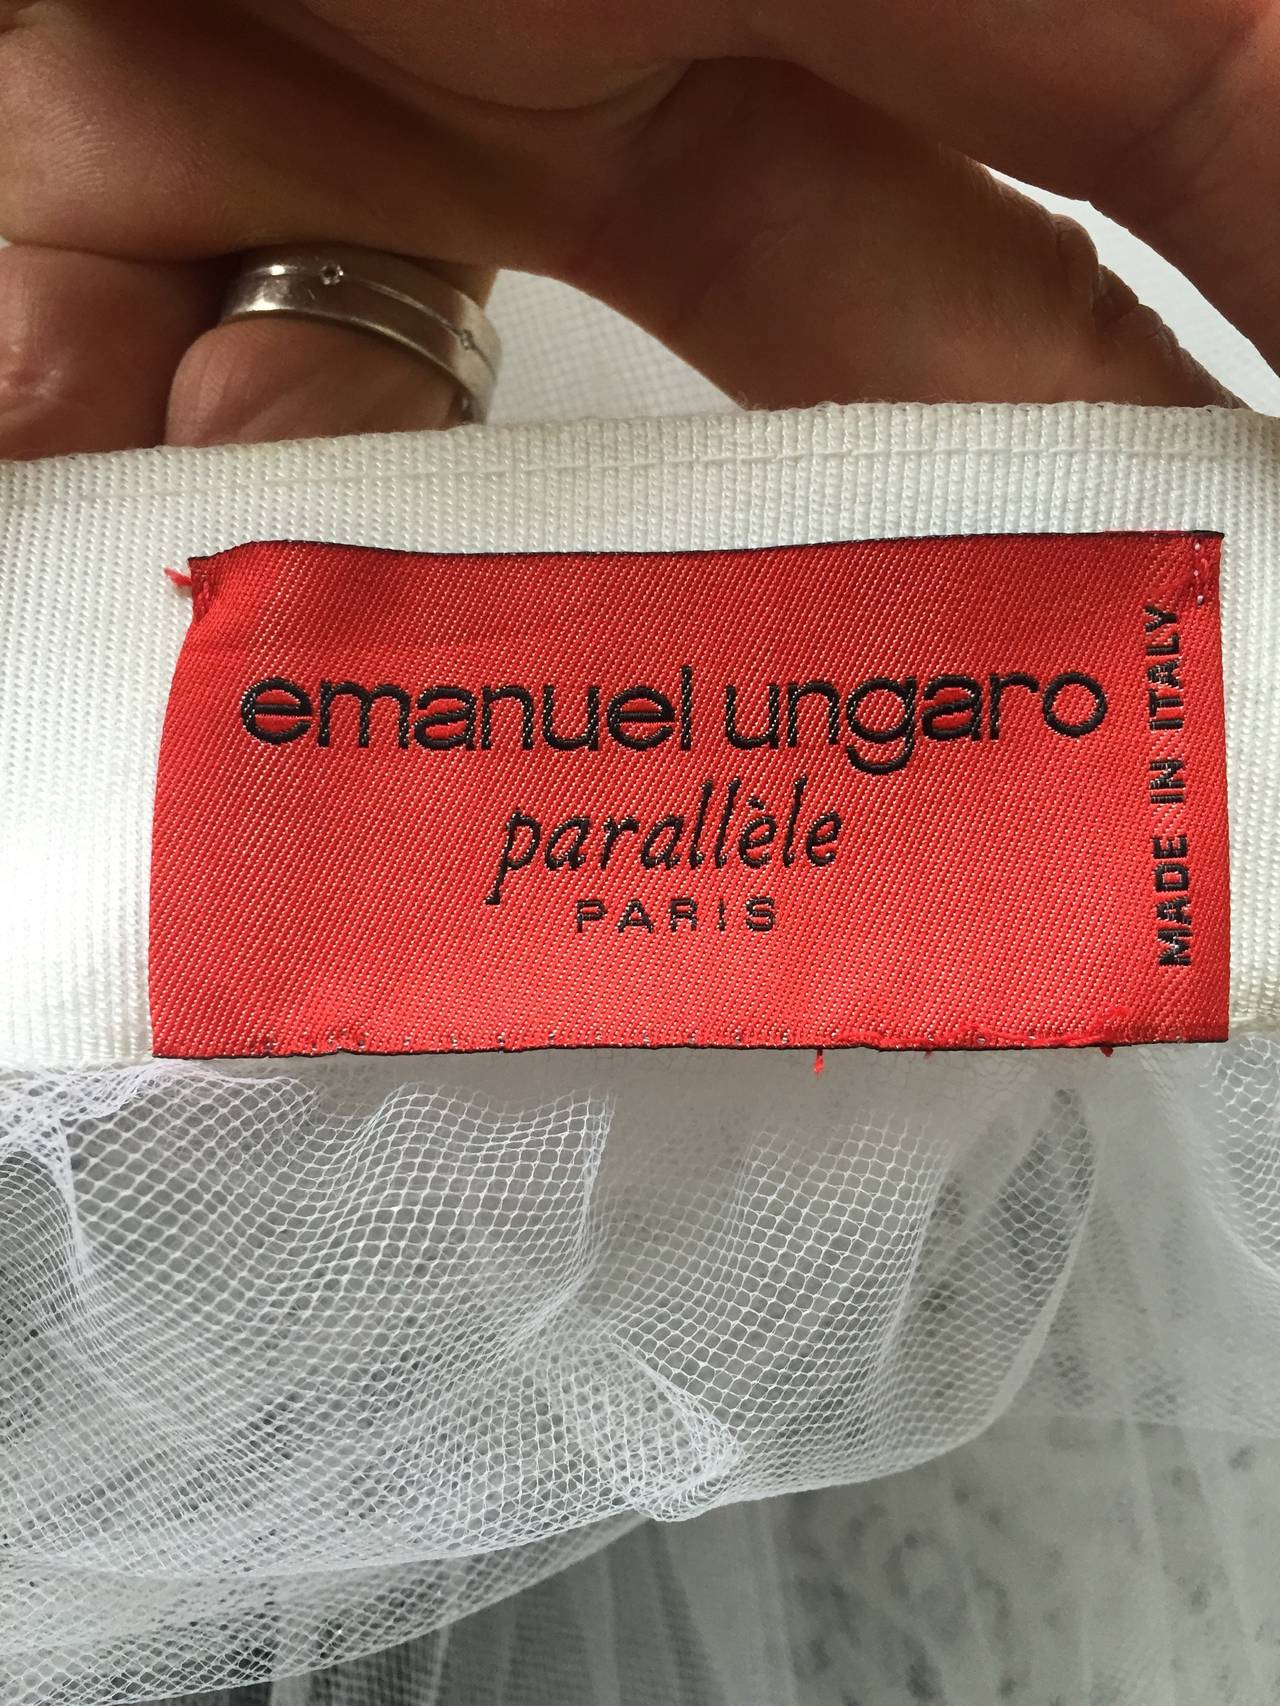 Emanuel Ungaro Parallele Paris 80s Petticoat Size 4. For Sale at 1stdibs